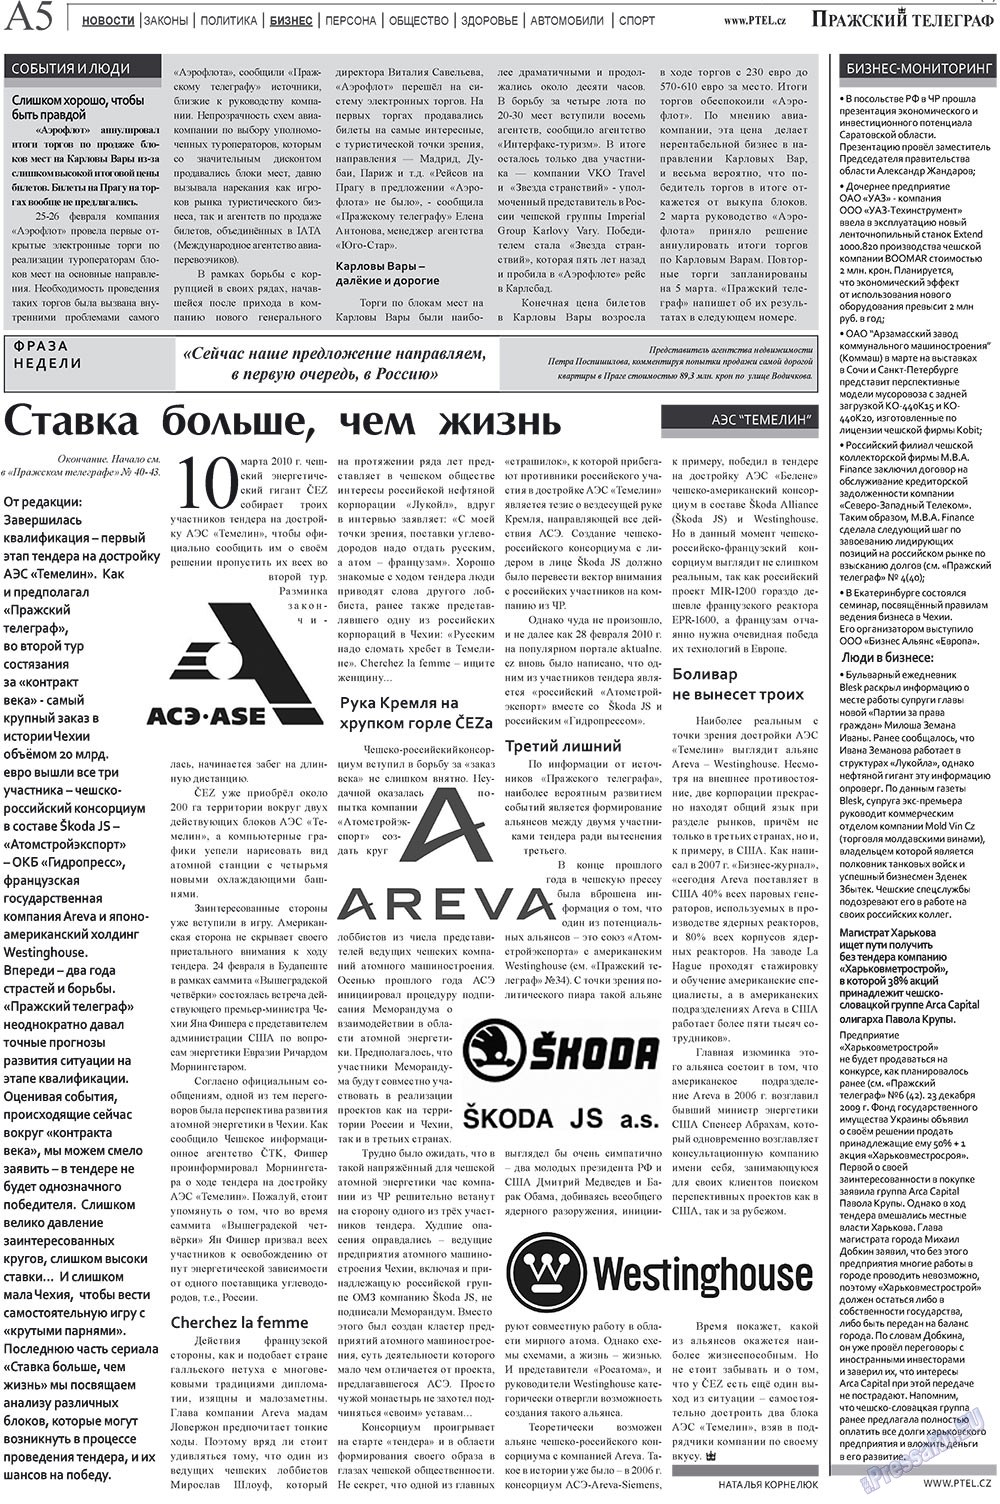 Пражский телеграф, газета. 2010 №9 стр.5